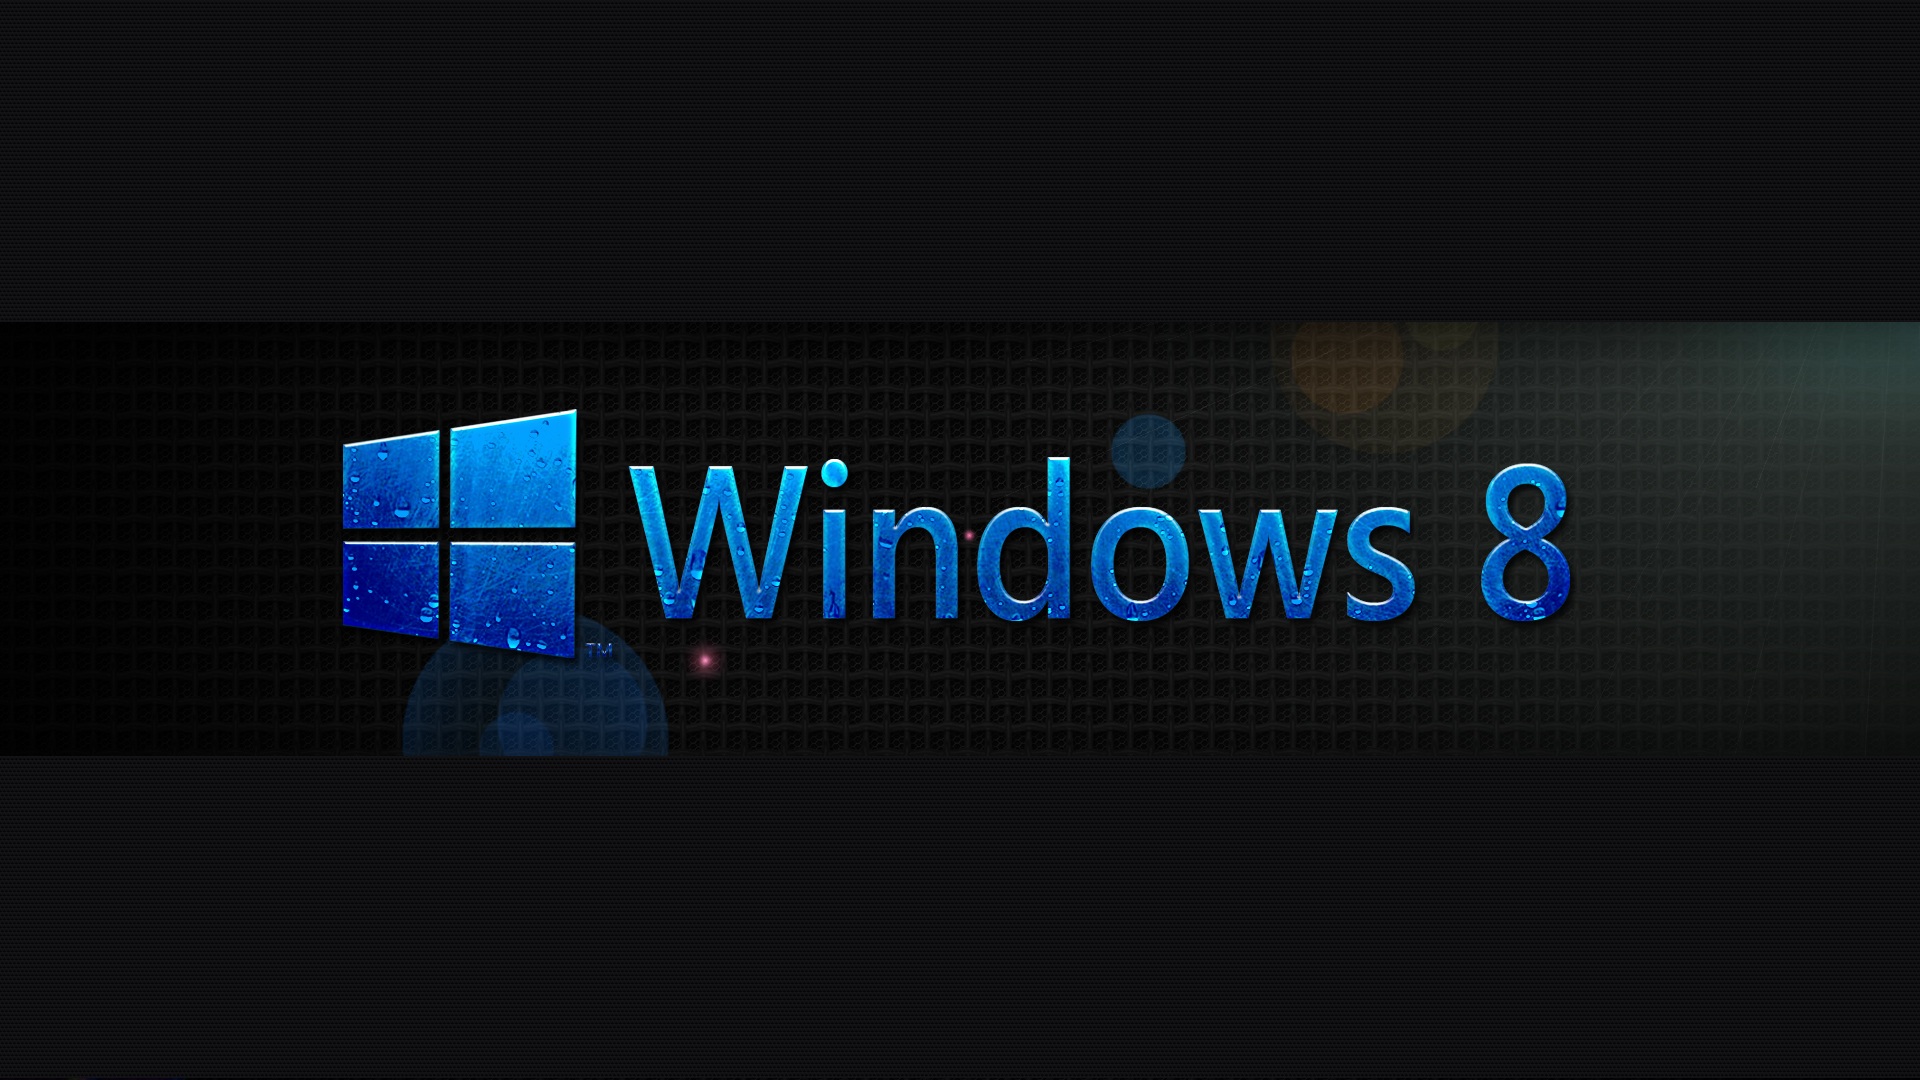 Windows 8 Images HD Wallpaper For Desktop - Dilshaddeyani